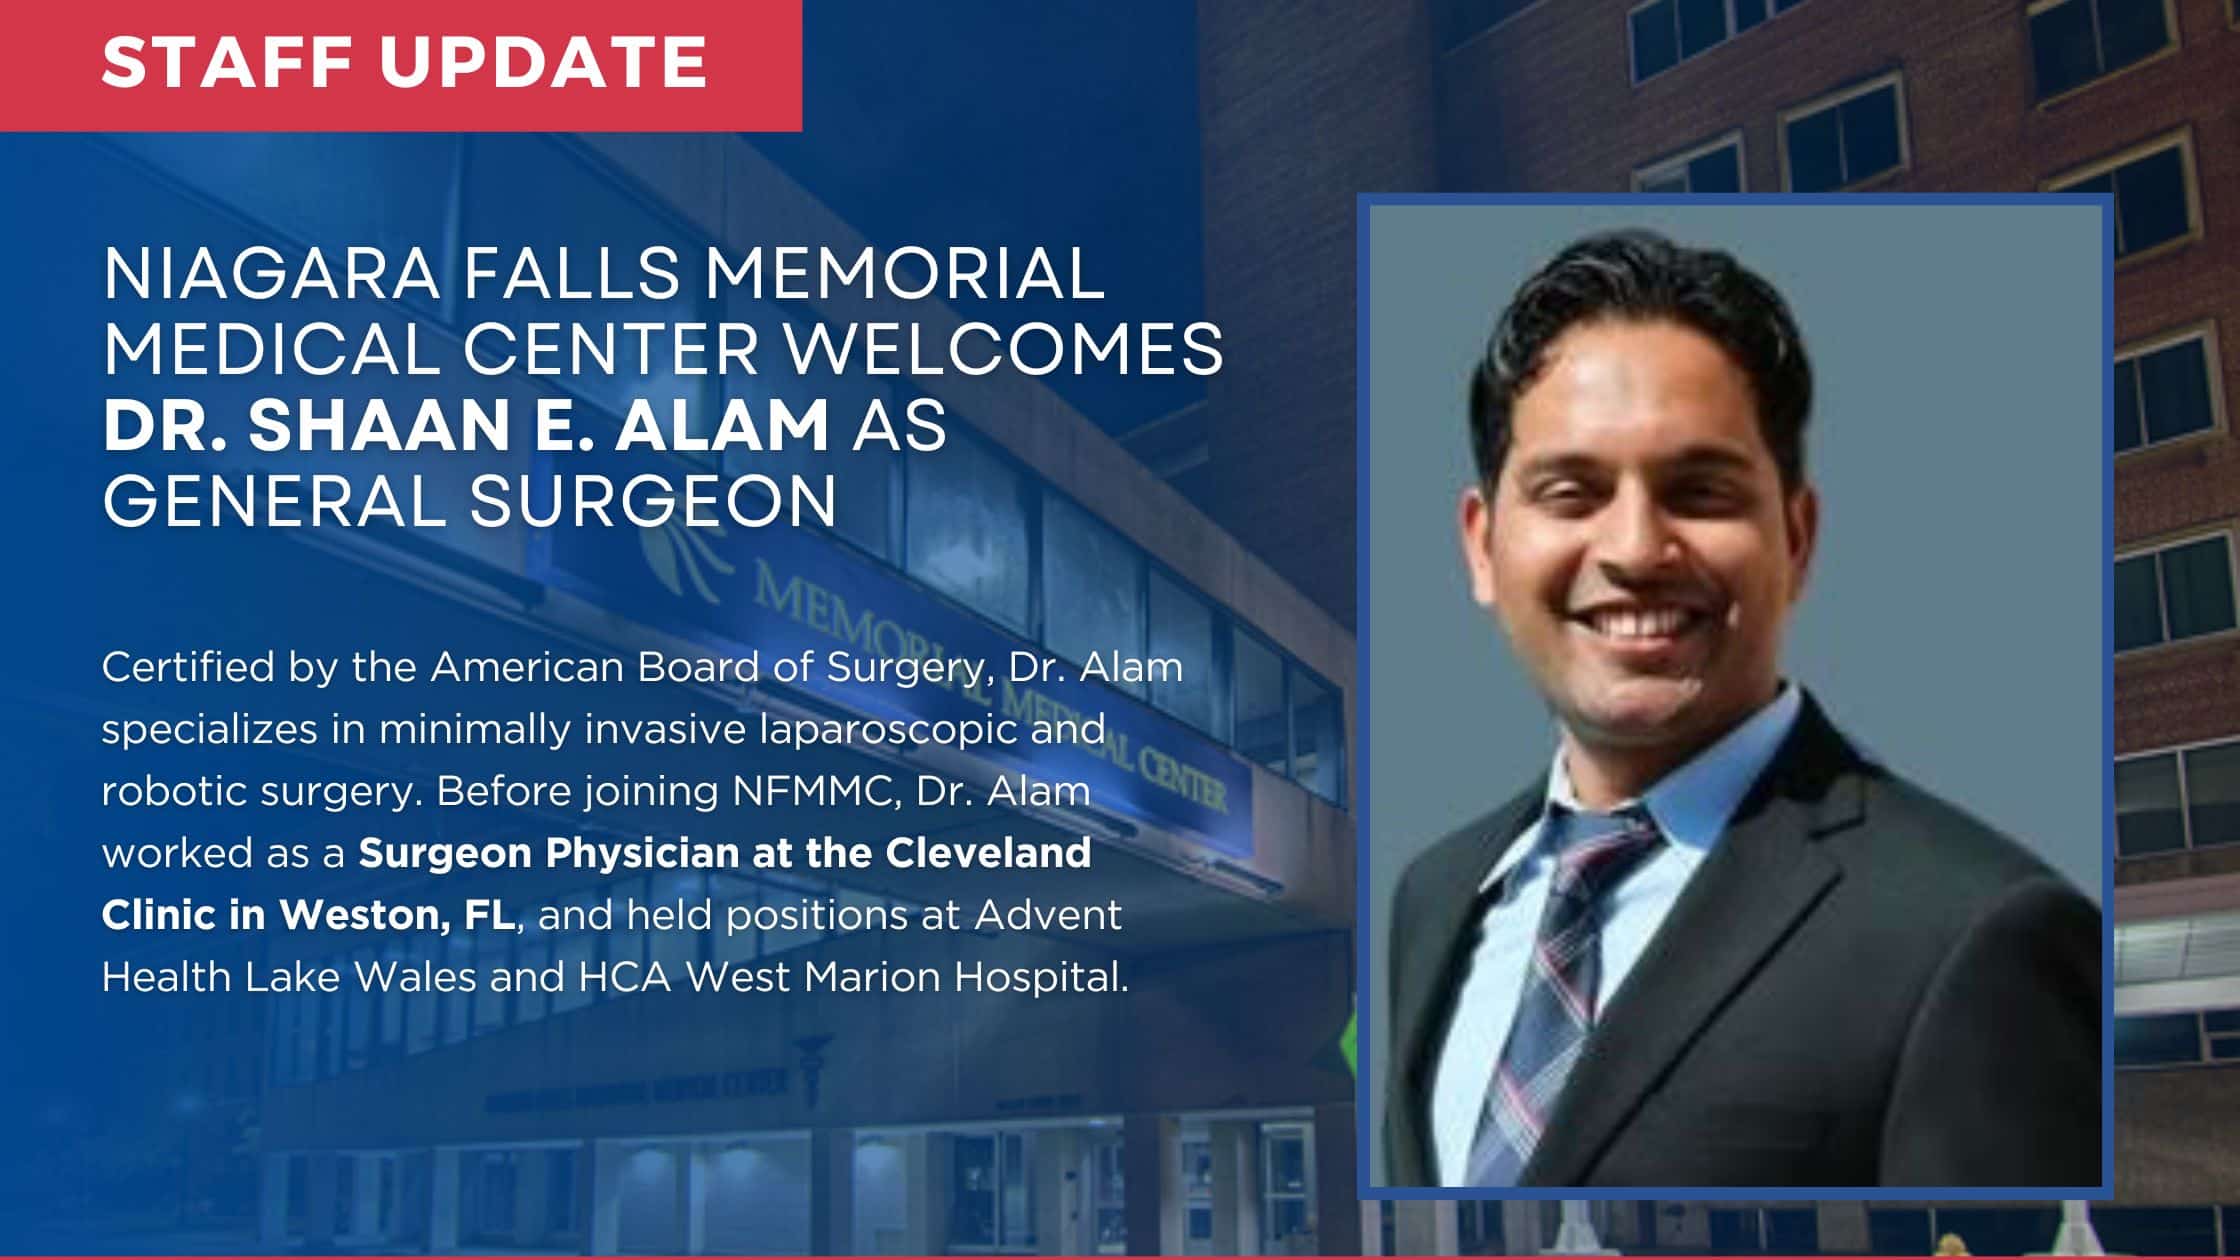 Niagara Falls Memorial Medical Center Welcomes Dr. Shaan E. Alam as General Surgeon